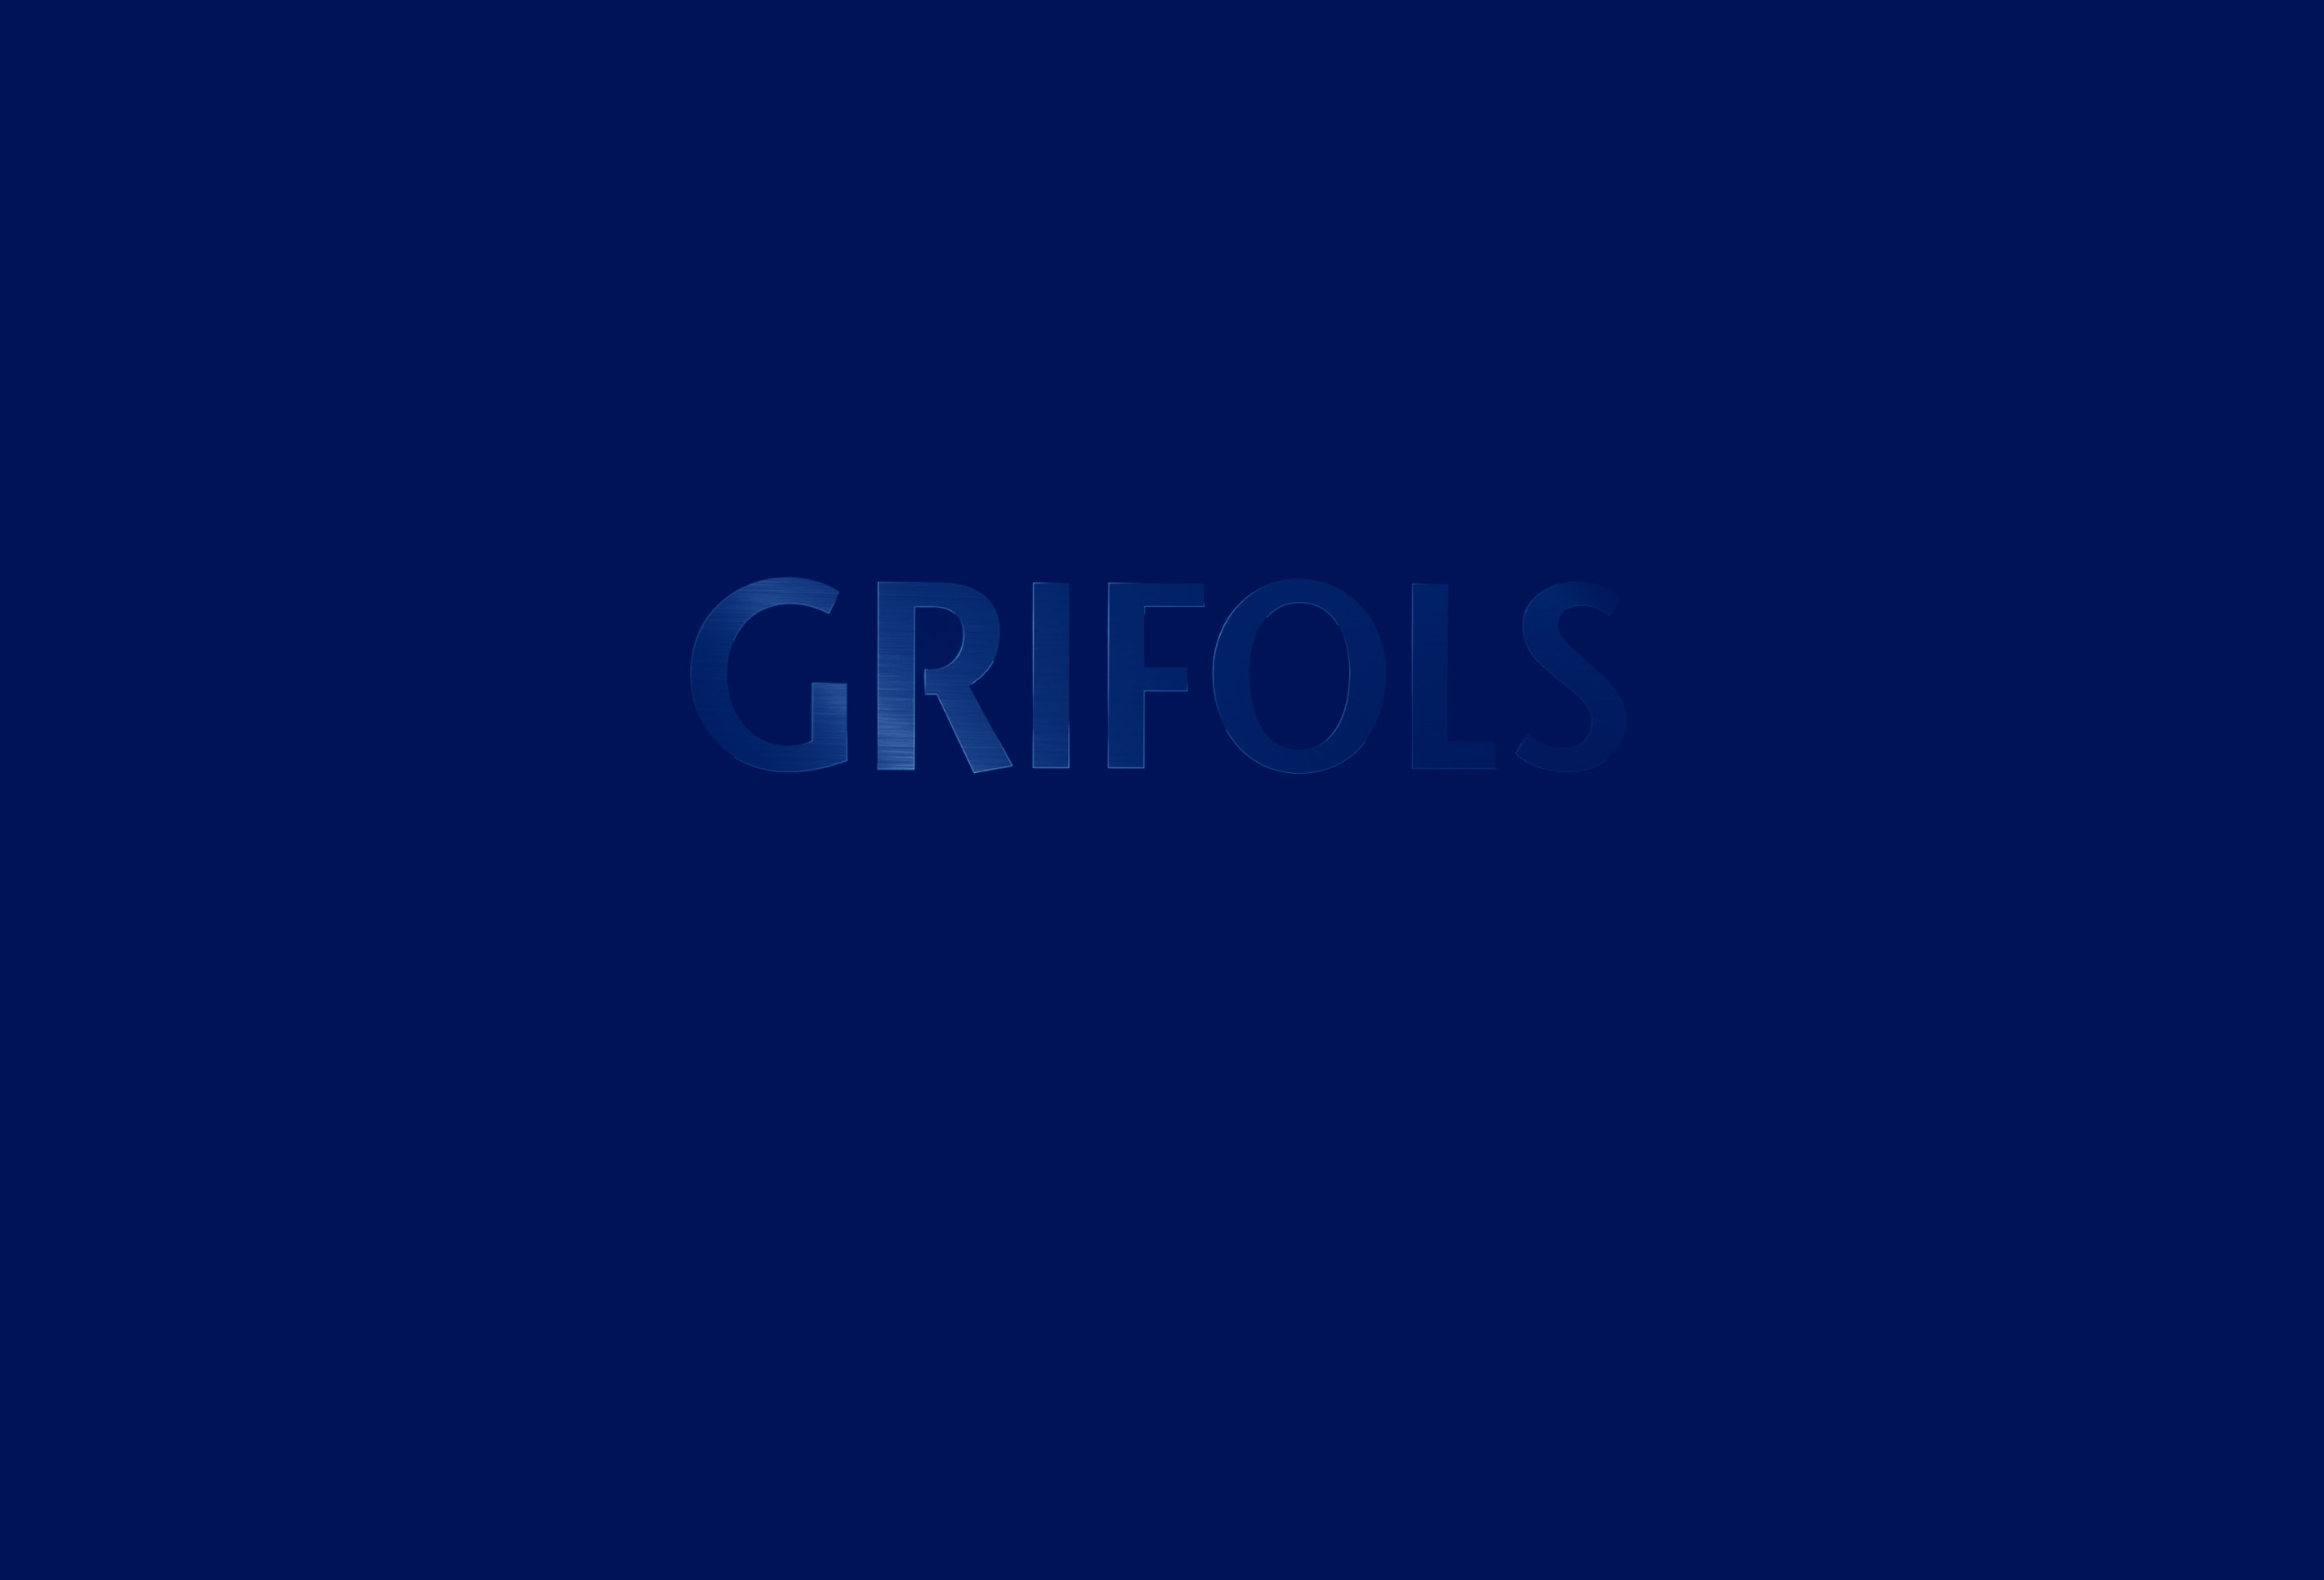 Grifols - Brand Architecture 